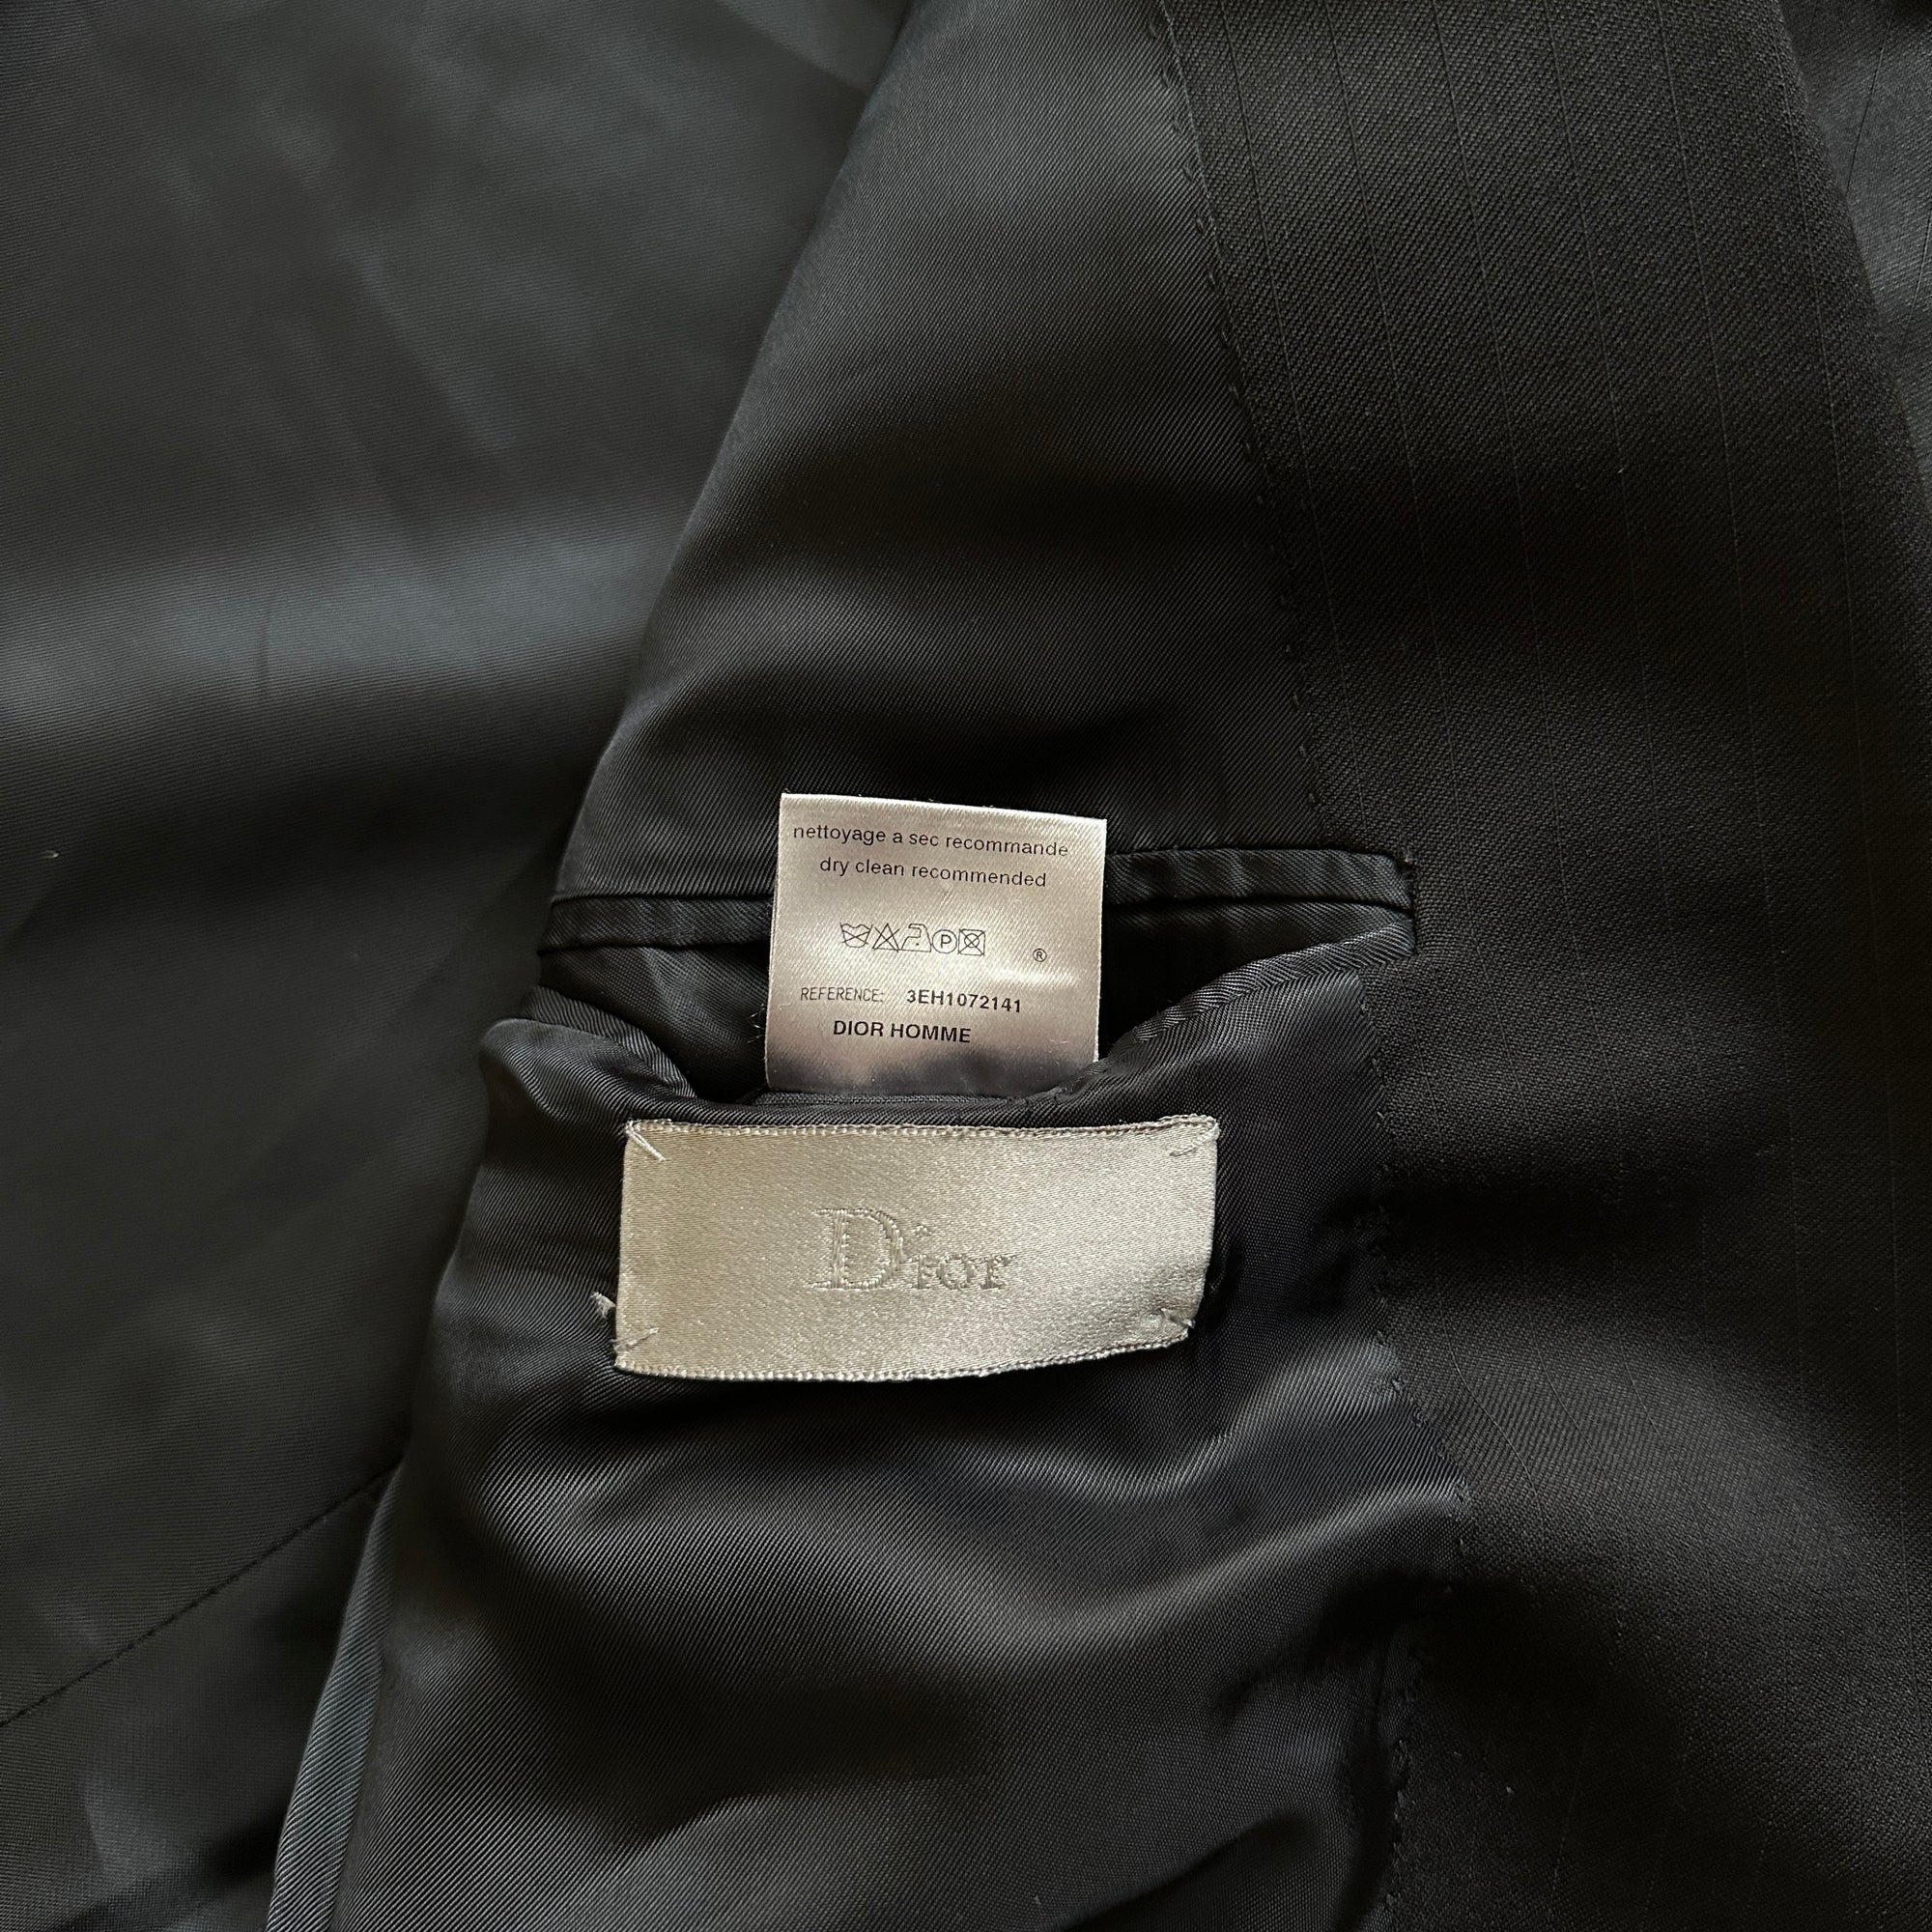 Dior Homme SS03 Follow Me Pinstripe Suit